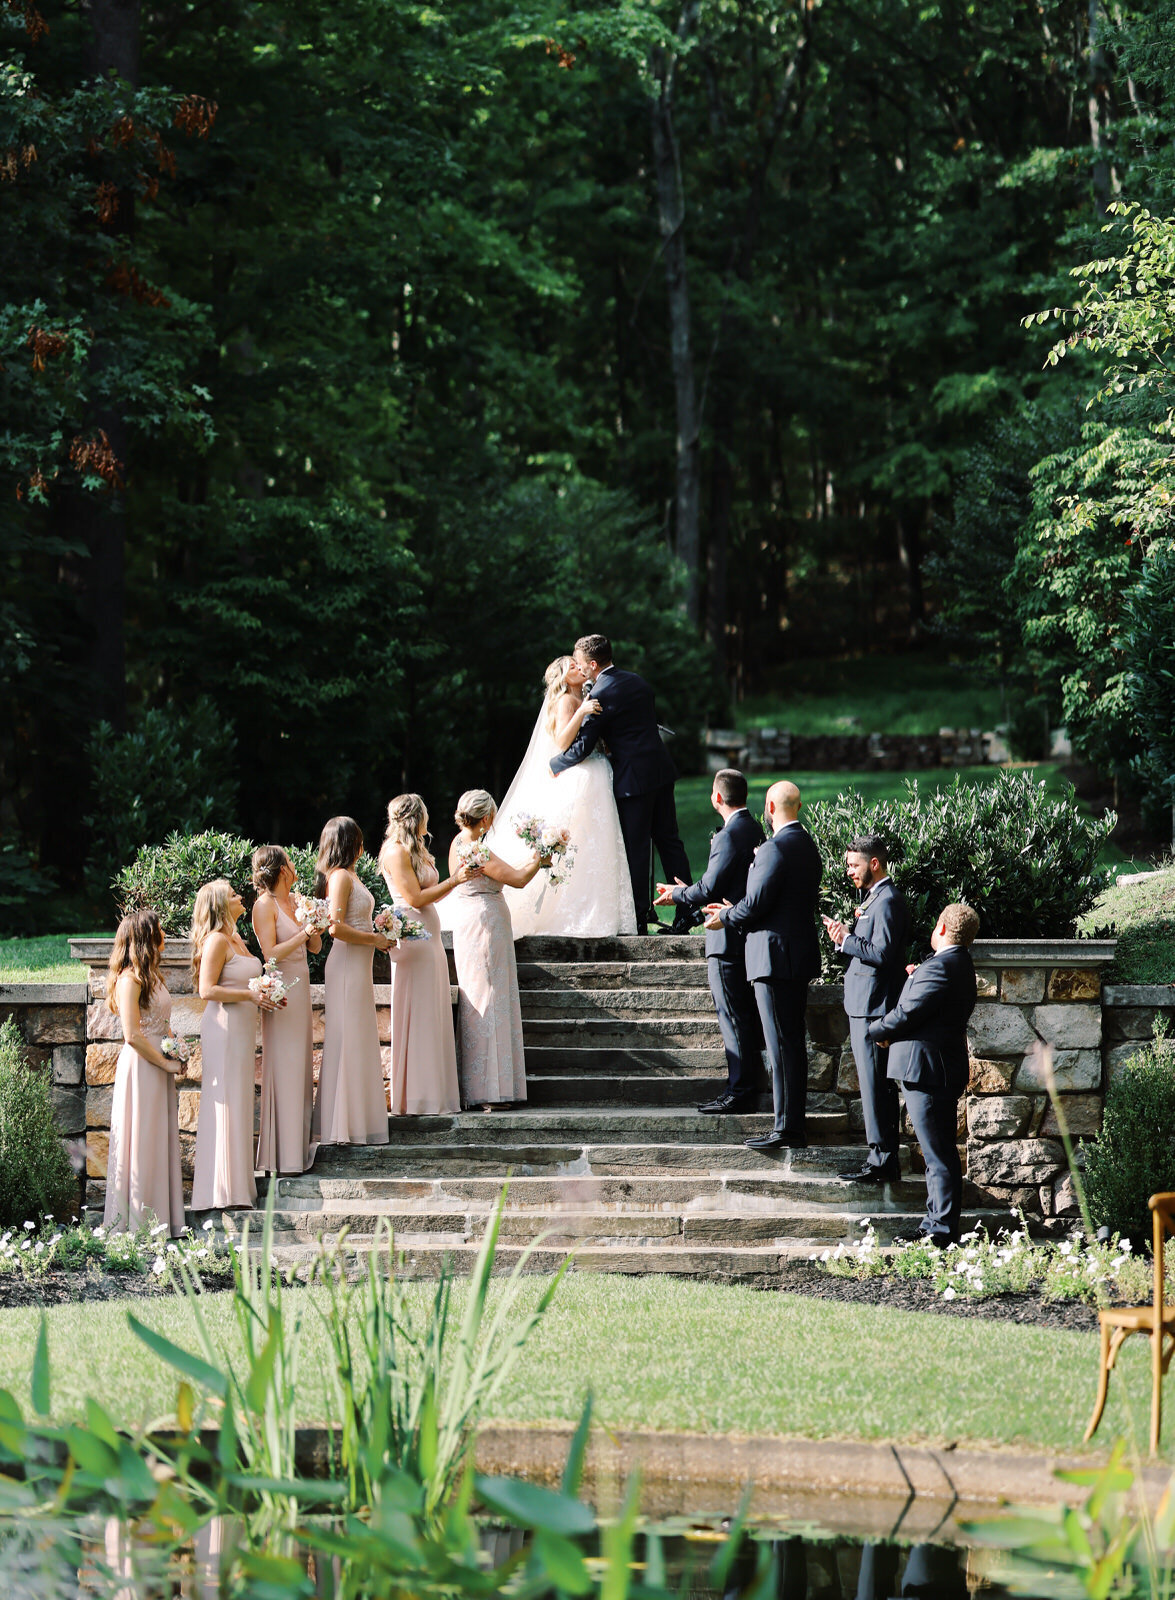 Elegant outdoor summer wedding photography at a historic Maryland wedding venue.